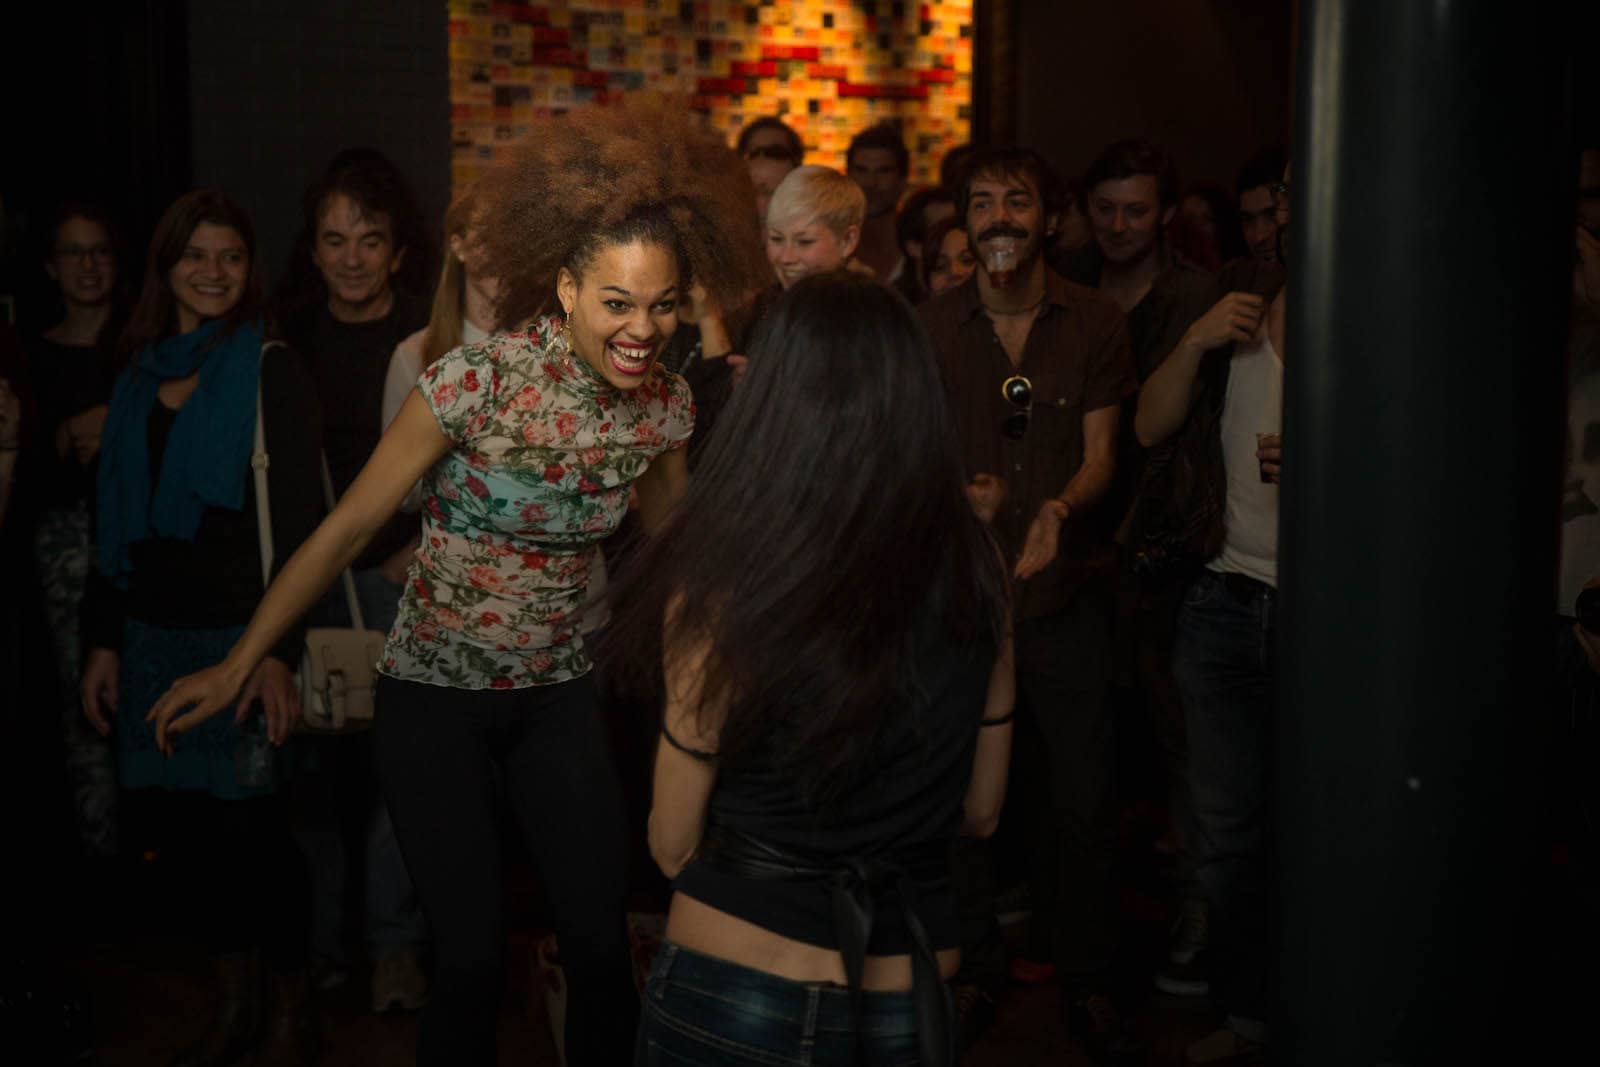 Singer Gigi Mcfarlane dancing with a fan at her concert